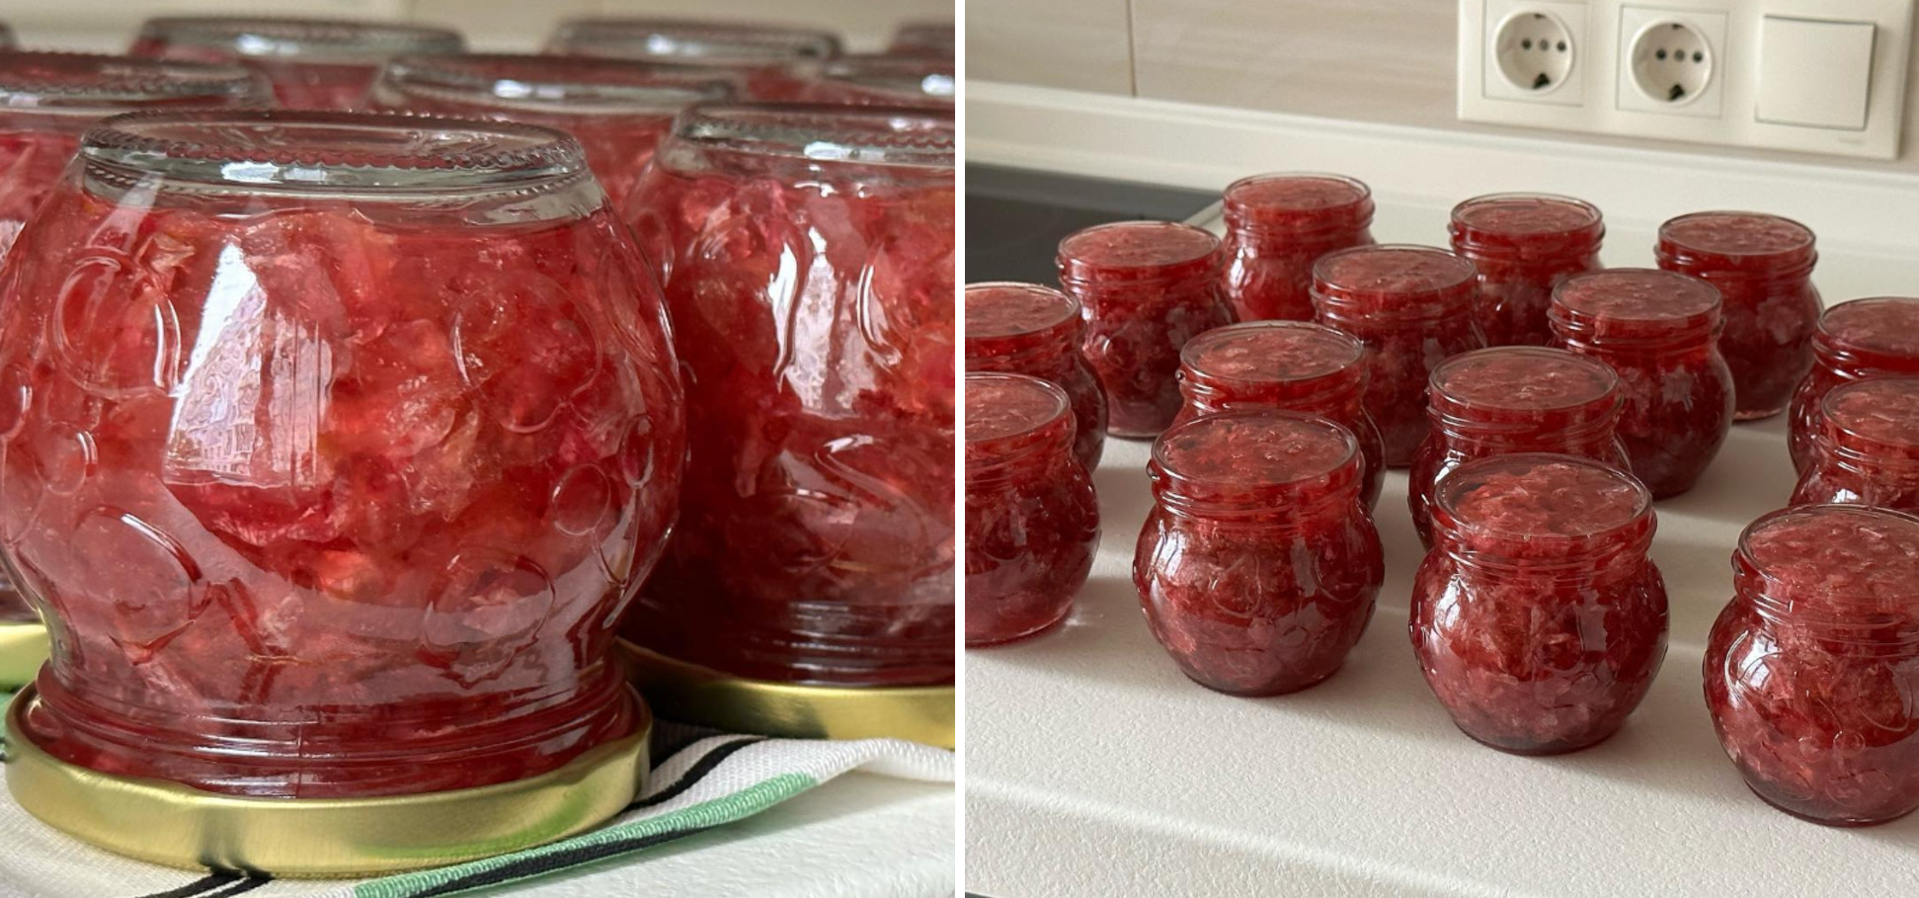 Fragrant homemade rose jam: how to prepare